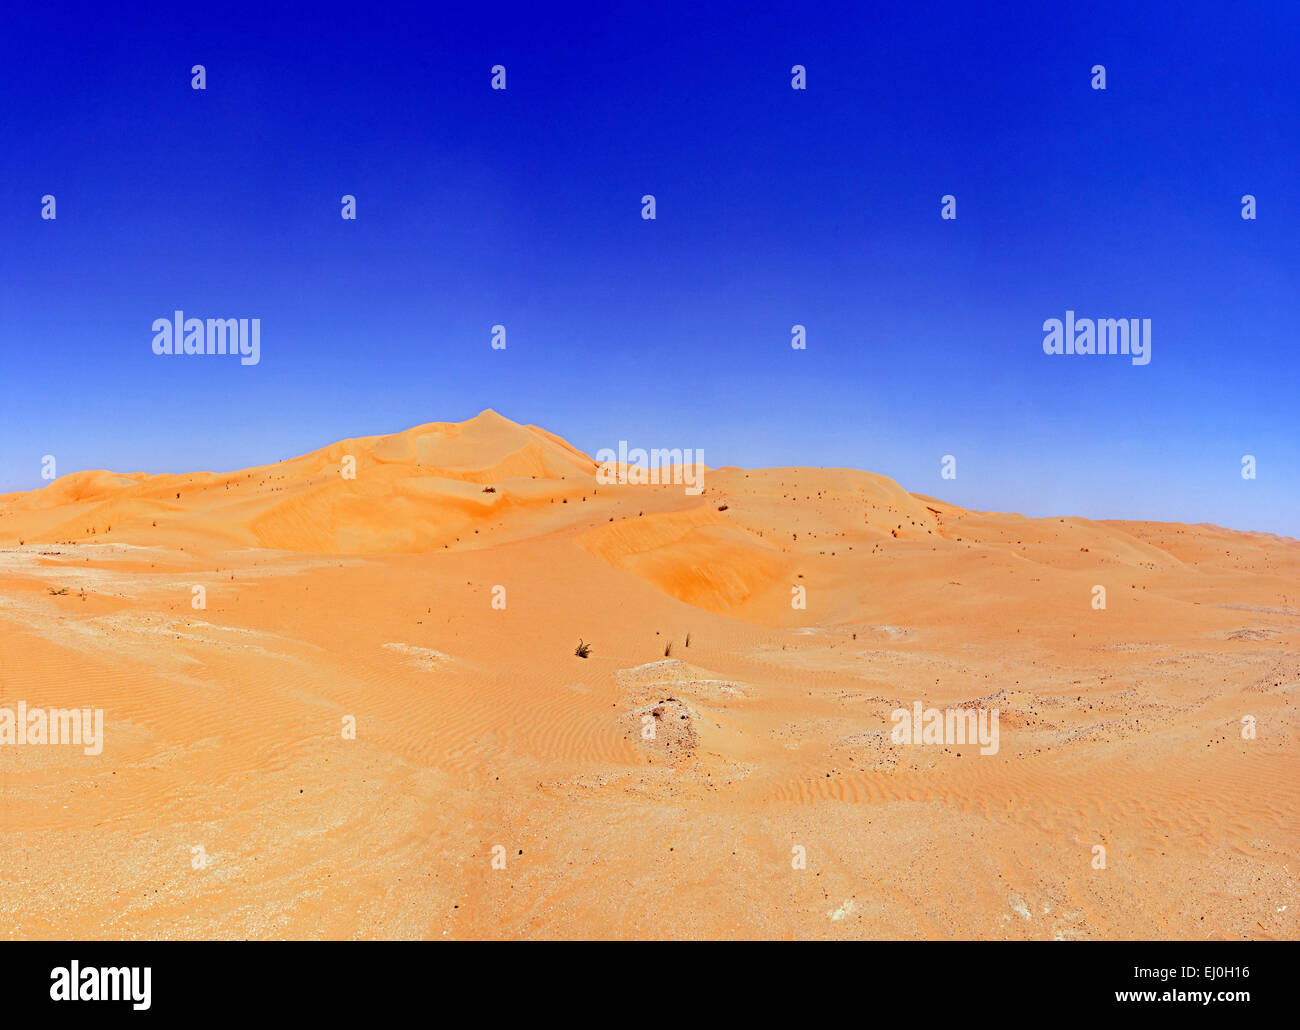 Asia, United Arab Emirates, UAE, Abu Dhabi, Arada, Liwa, Arada Road, desert, sand dunes, mountains, sand, desert, panorama, scene Stock Photo